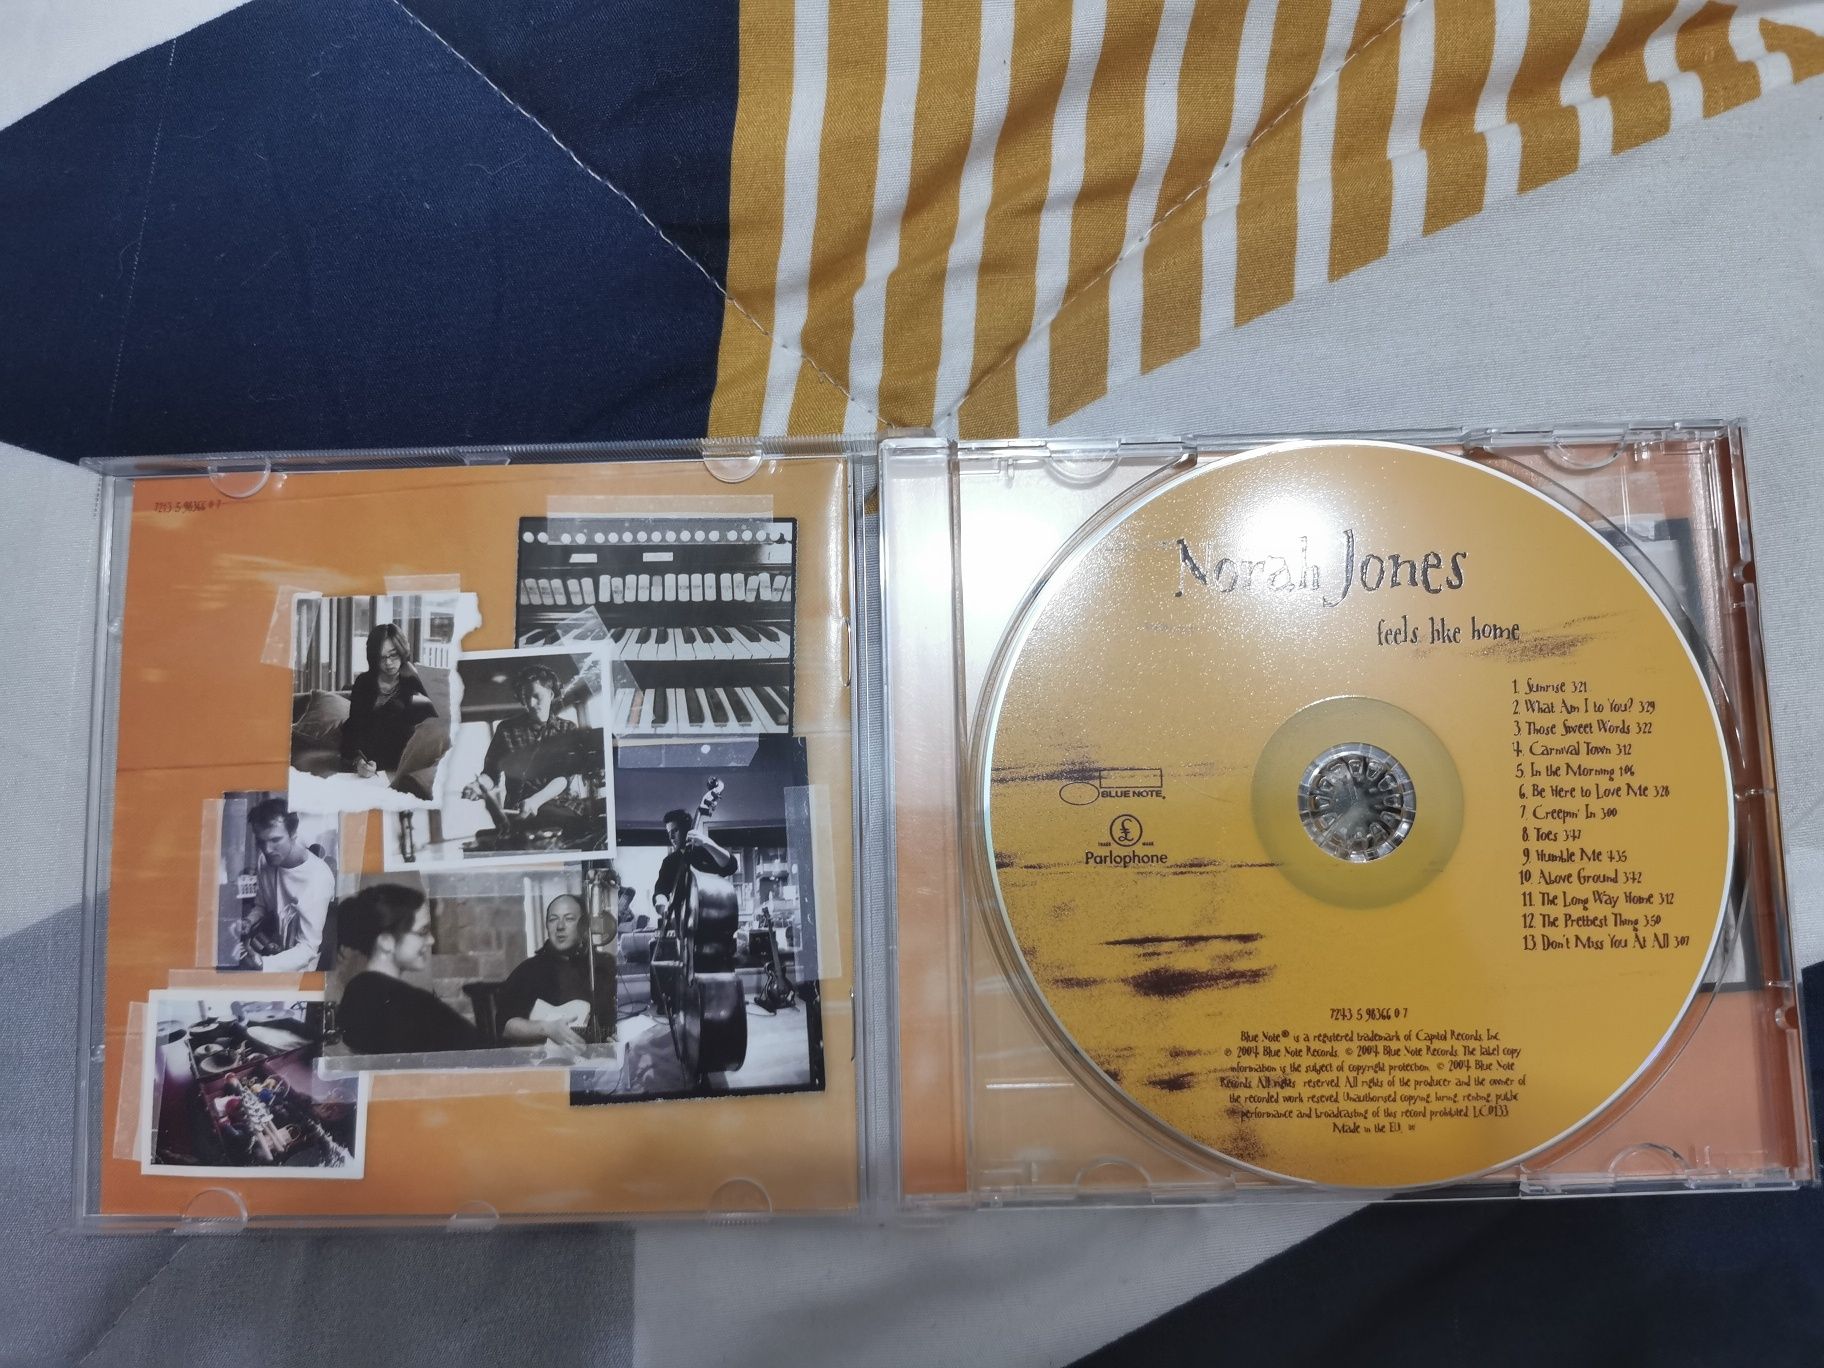 CD Original de música - Norah Jones (Feels like home)